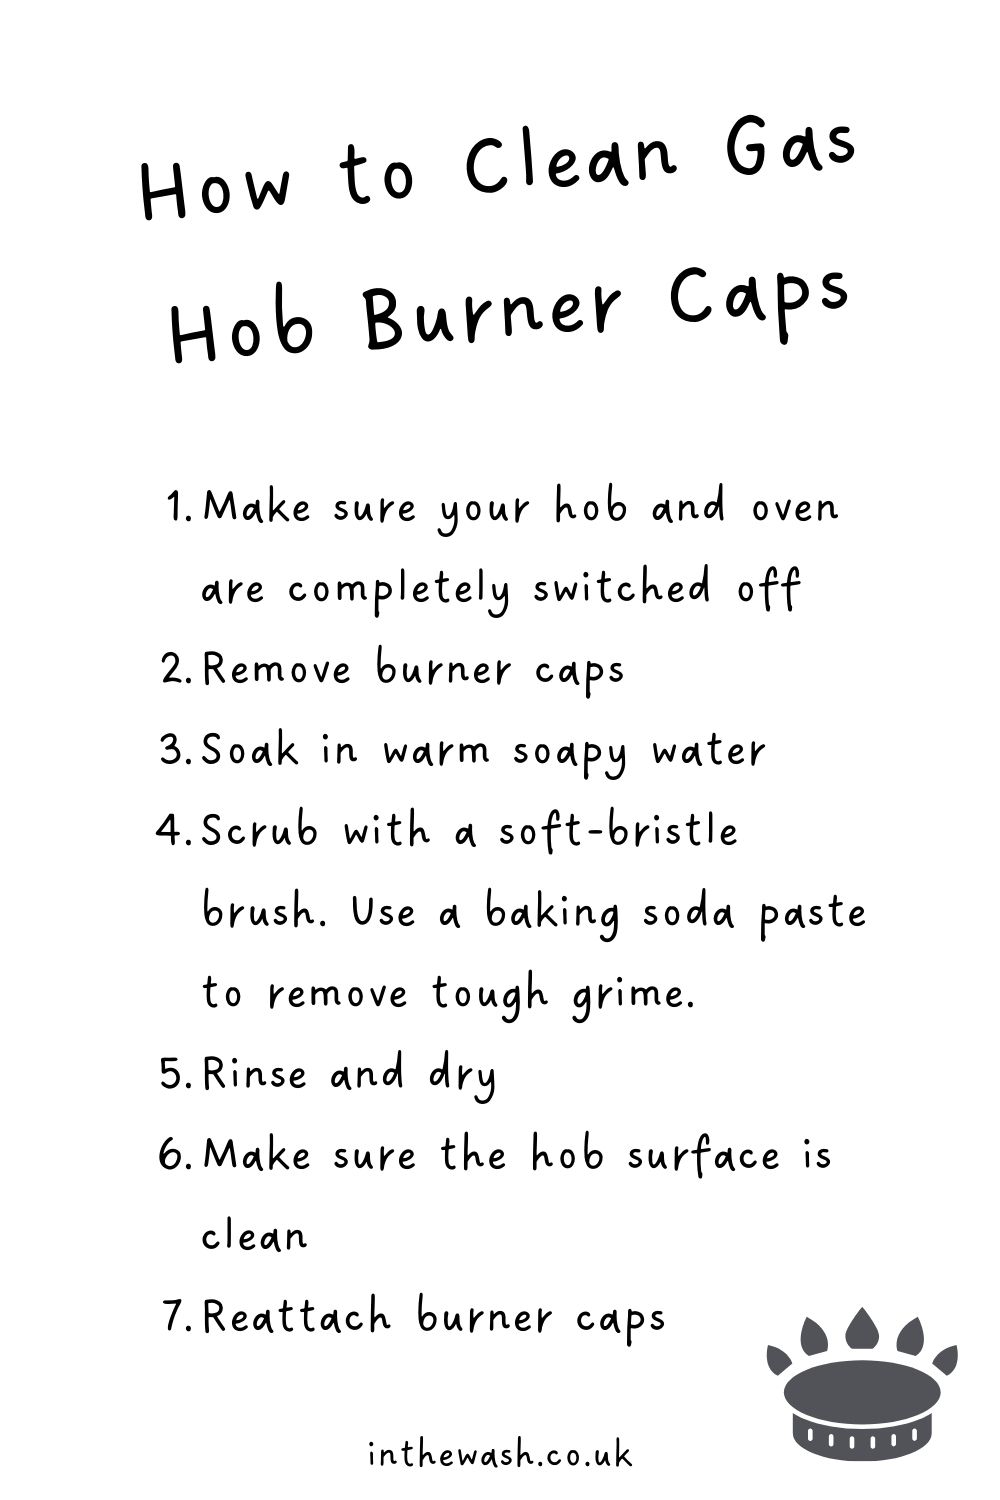 How to Clean Gas Hob Burner Caps